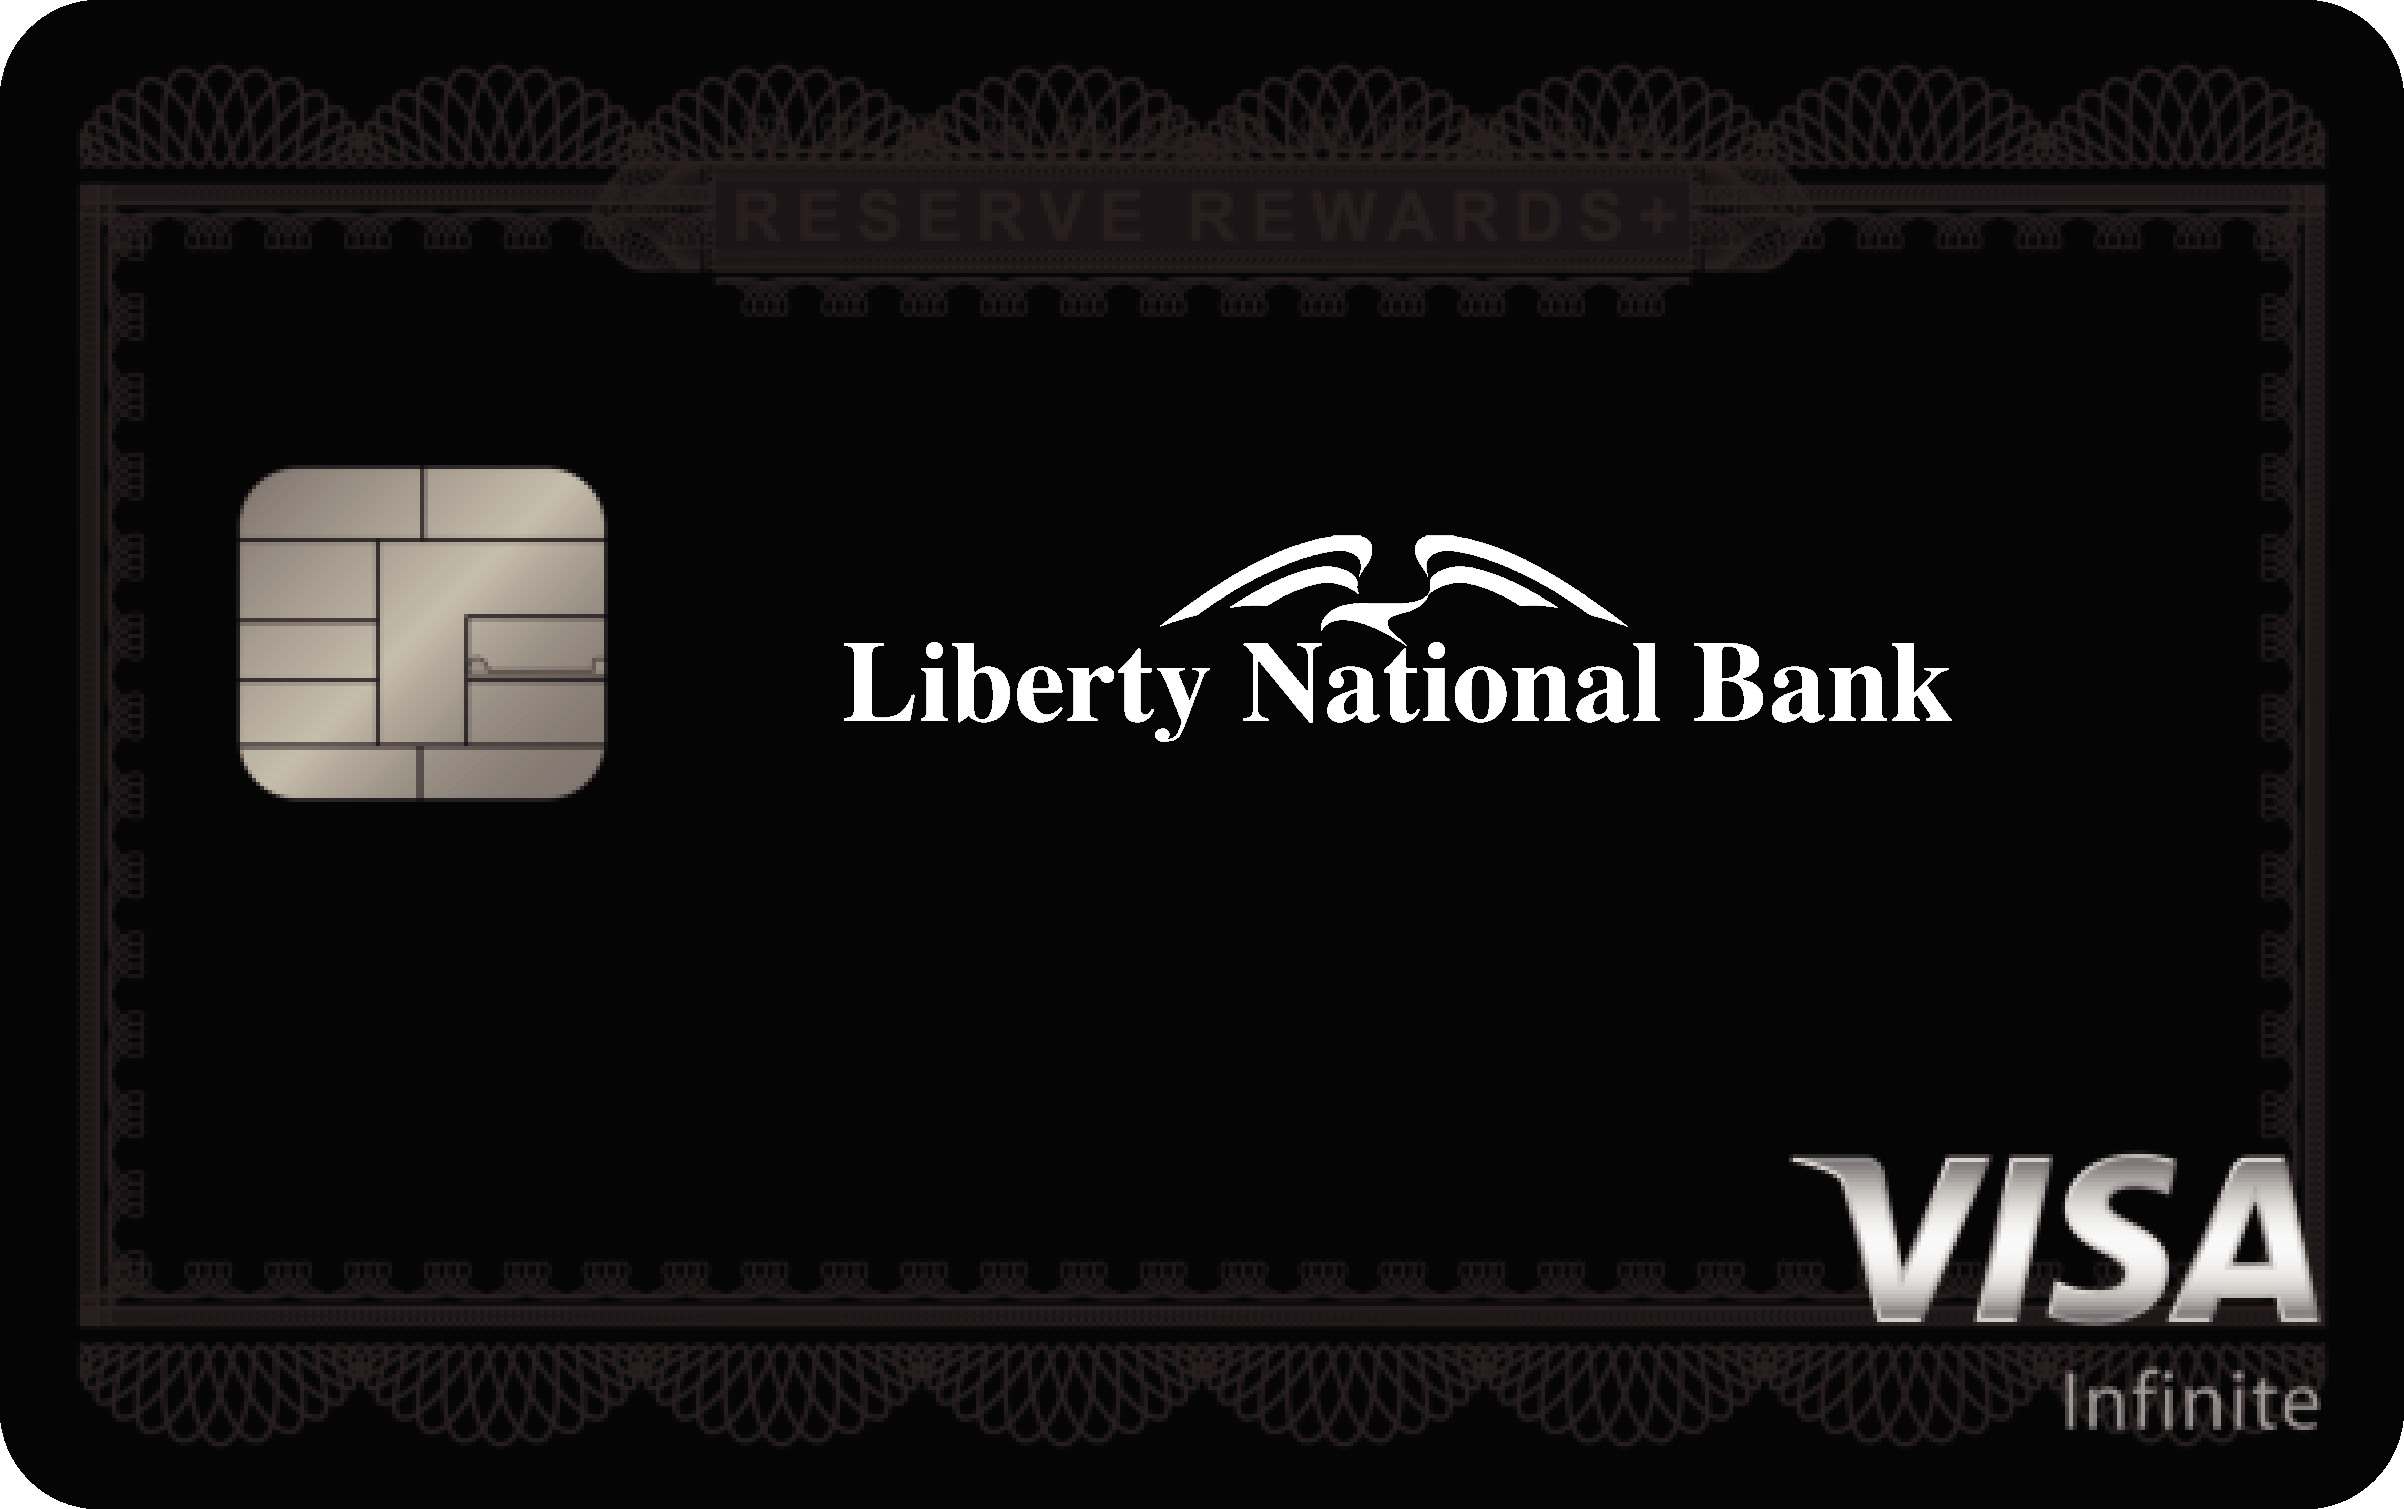 Liberty National Bank